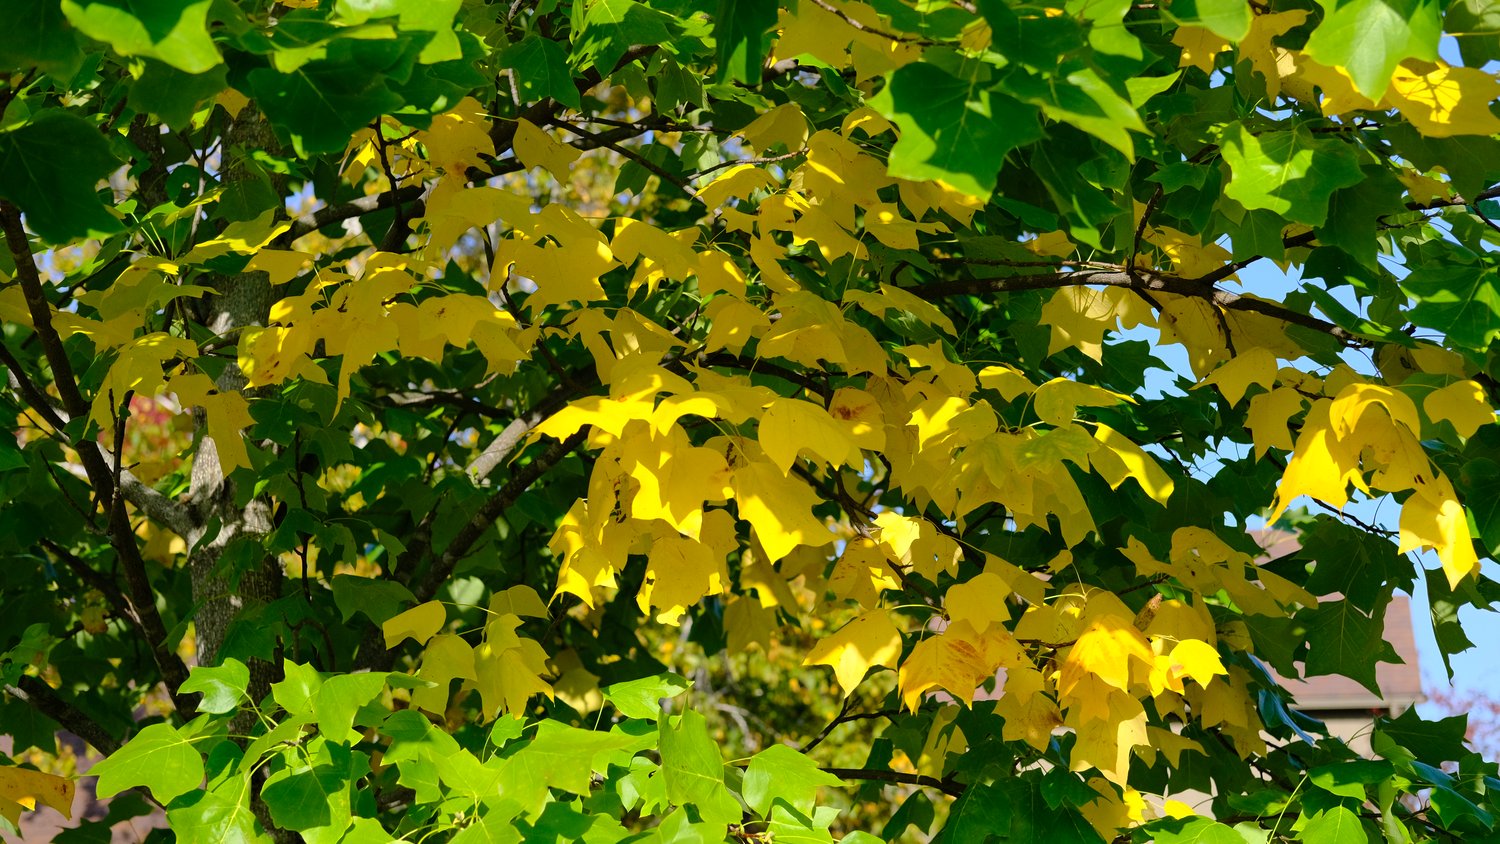 Yellow leaves mixed among green.